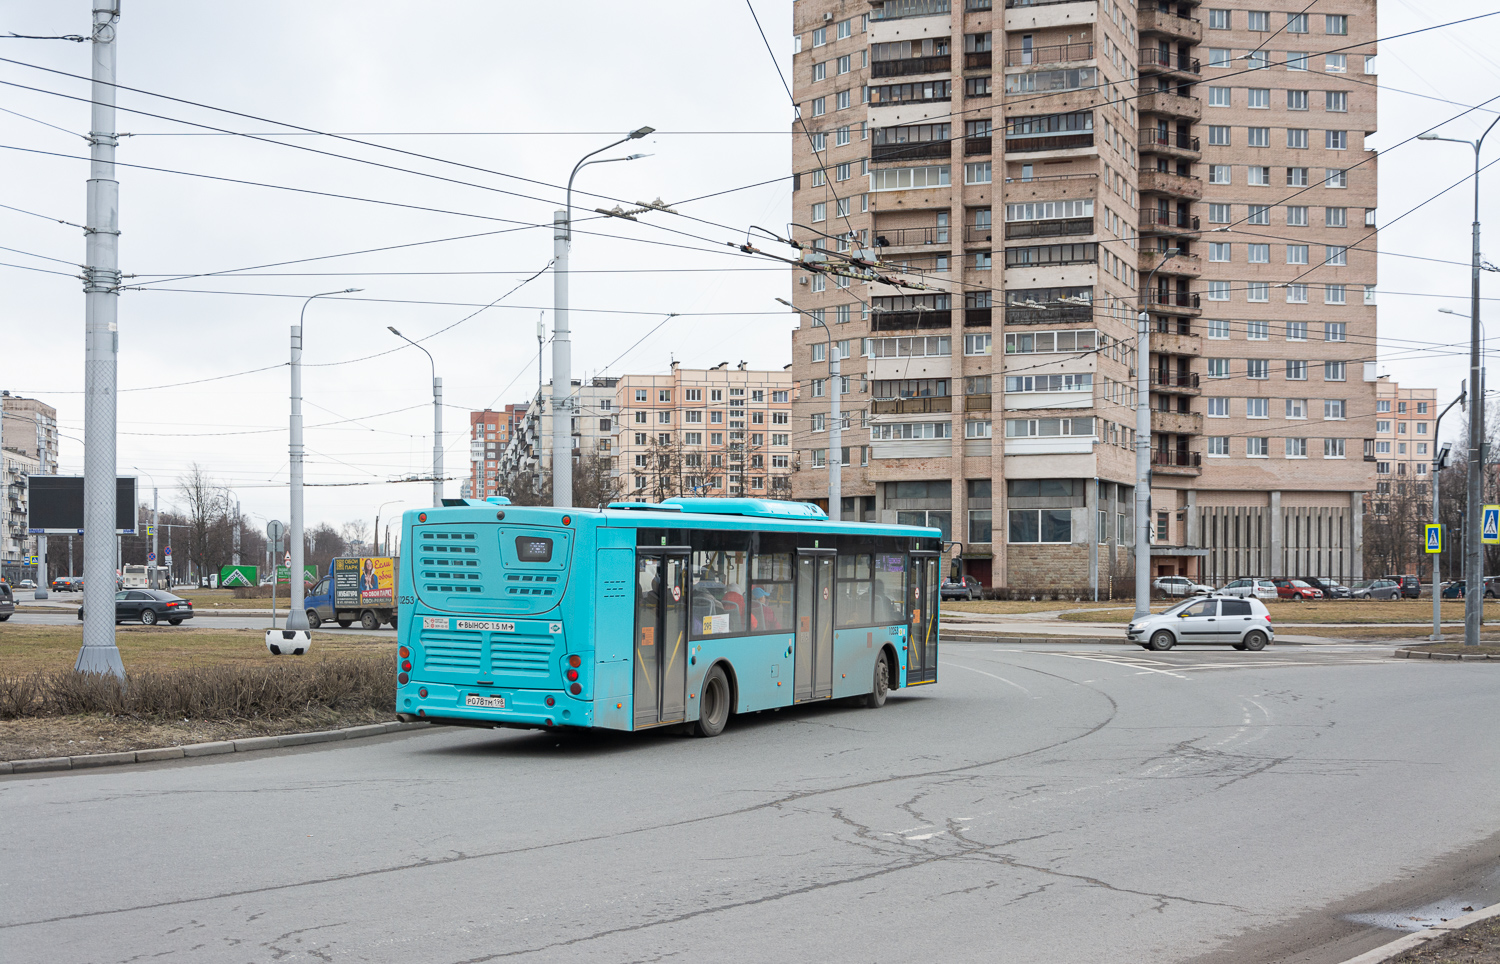 Saint Petersburg, Volgabus-5270.G4 (LNG) # 10253